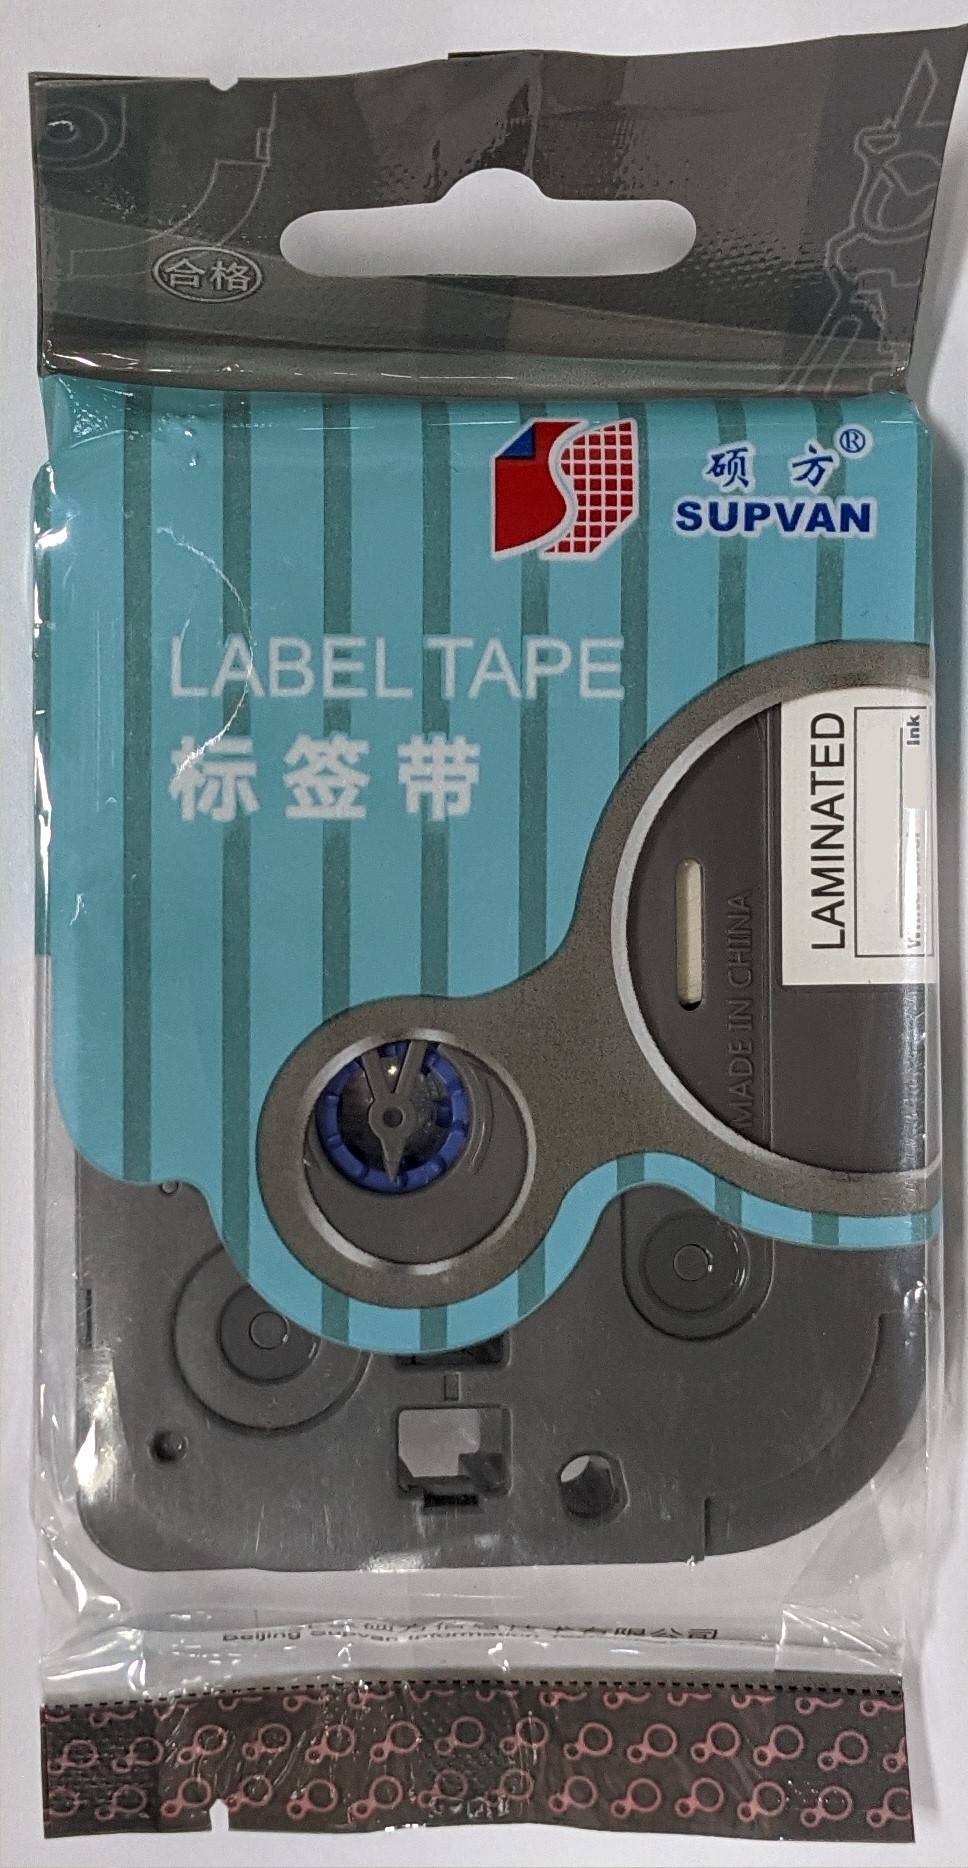 Samolepicí páska Supvan L-735E, 12mm x 8m, bílý tisk / zelený podklad, laminovaná